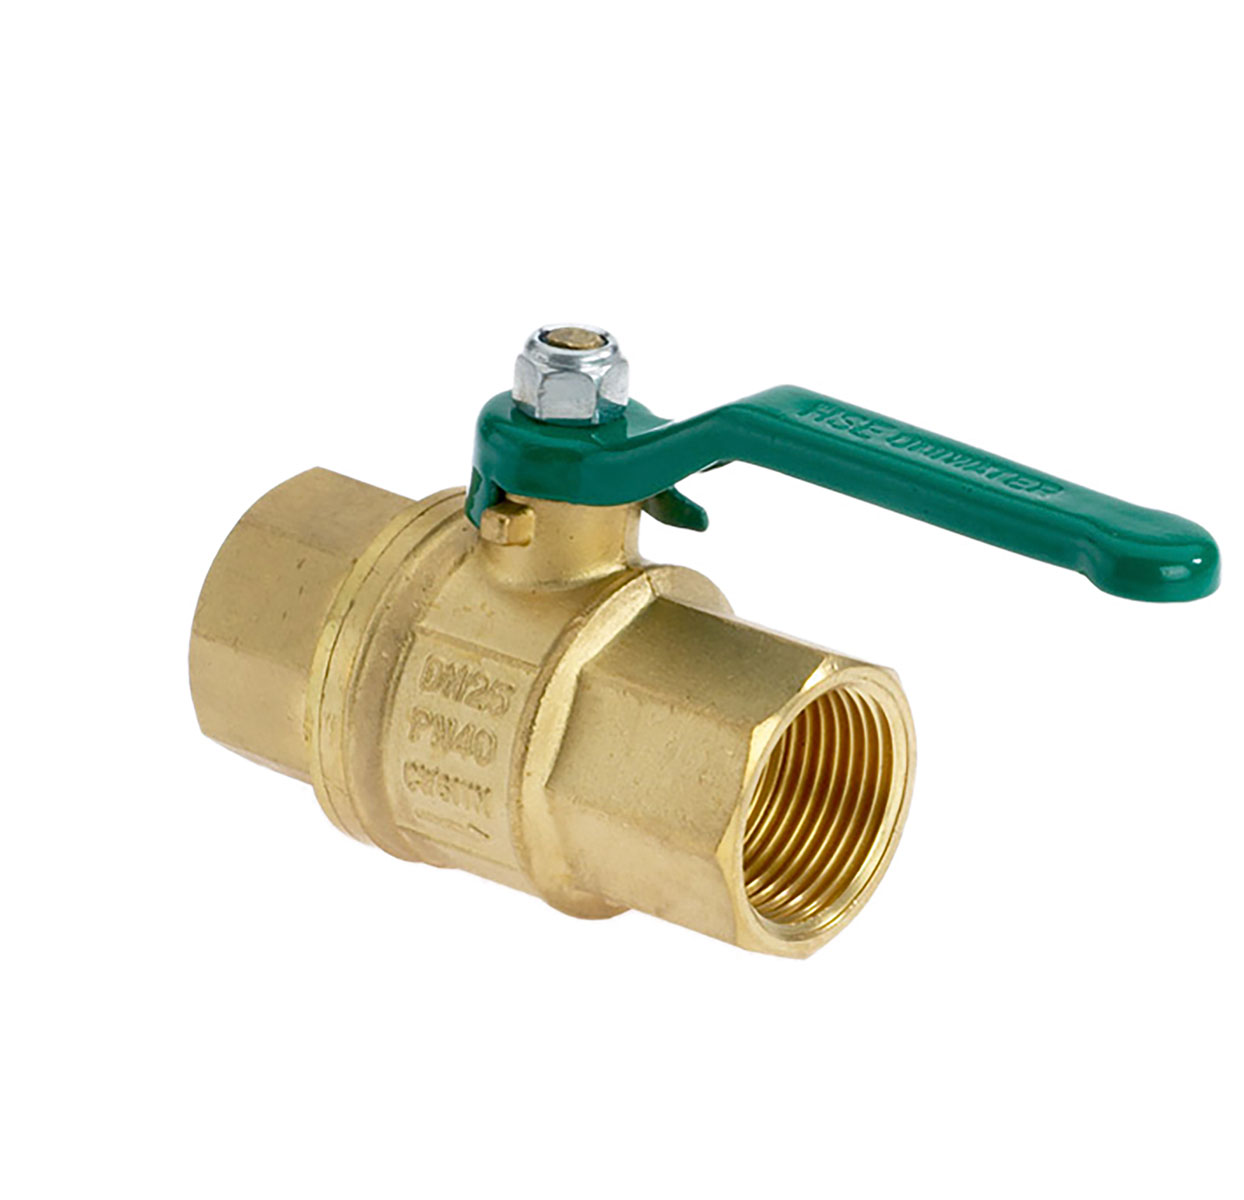 1332150 - Ball valve DIN-DVGW female-thread